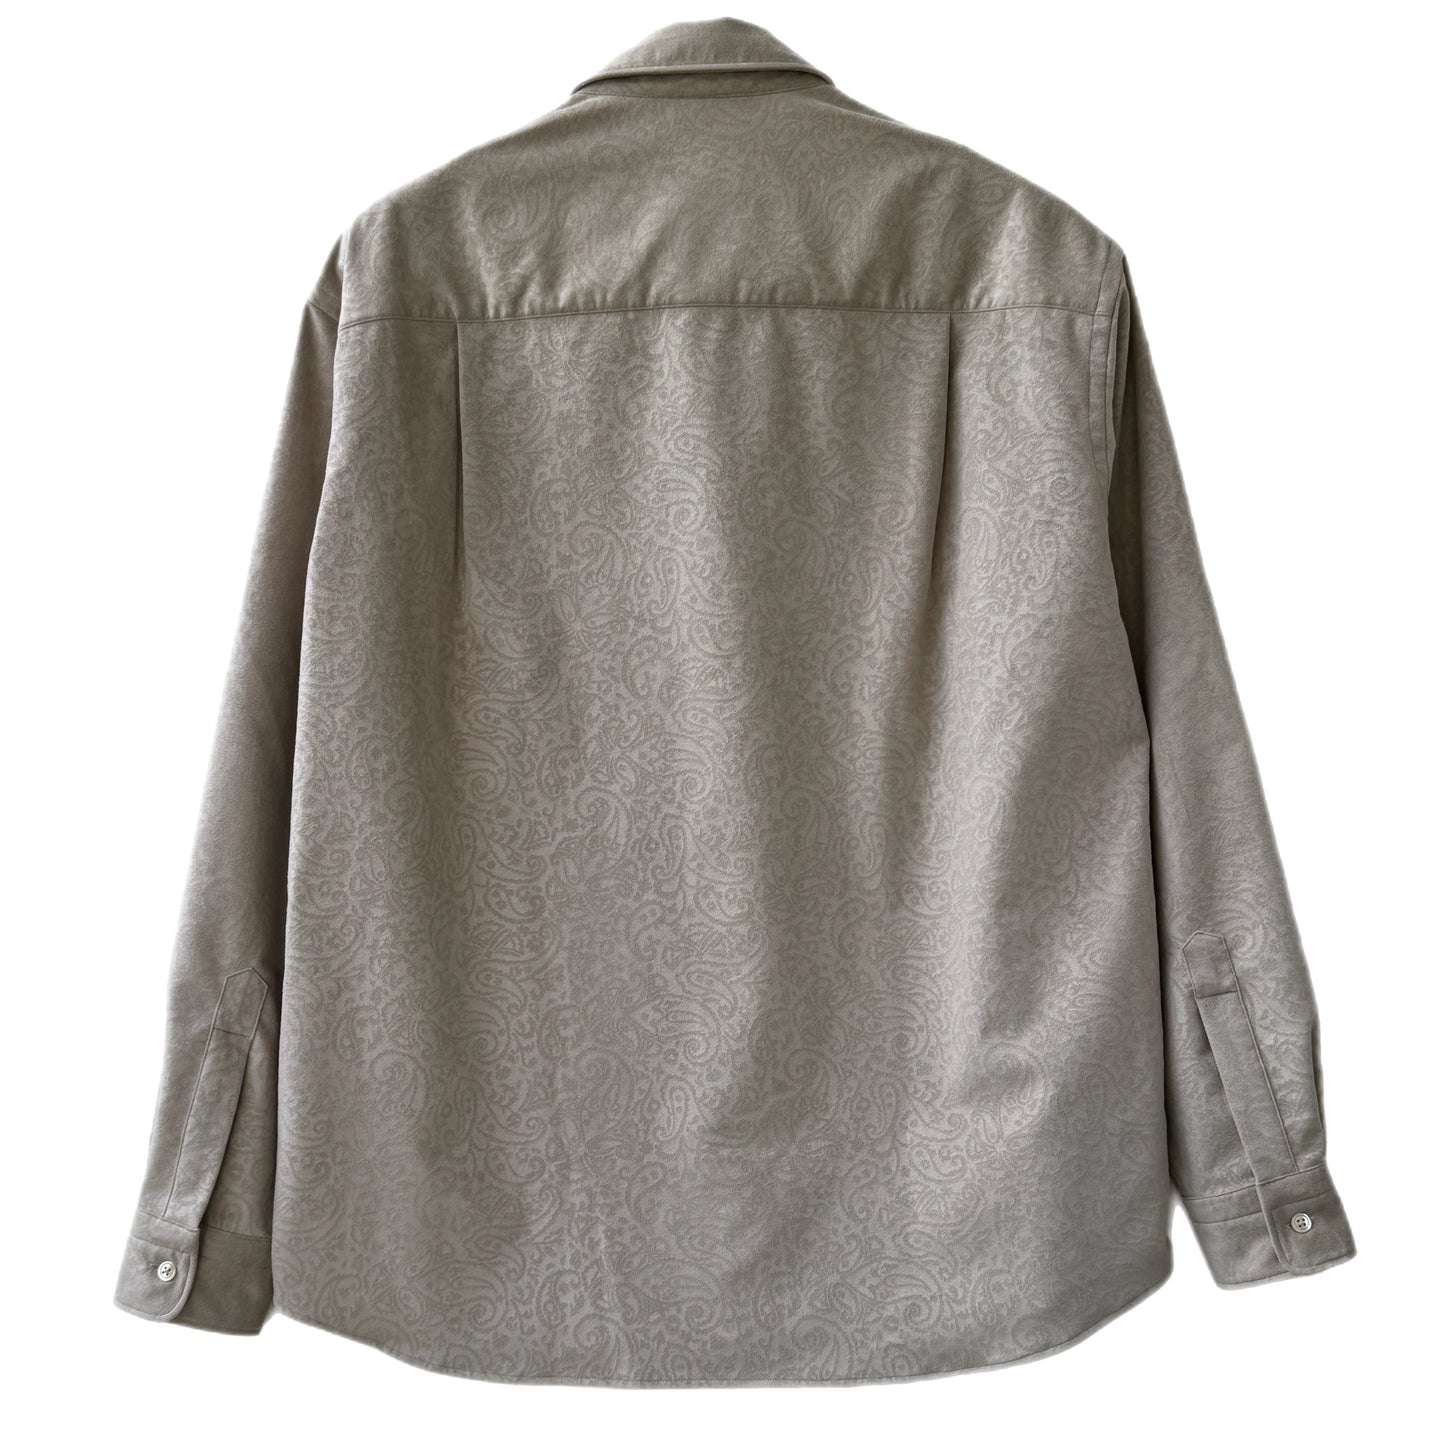 COLONY CLOTHING / Ultrasuede®  ダブルポケットシャツ ペイズリー / CC2401-SH04